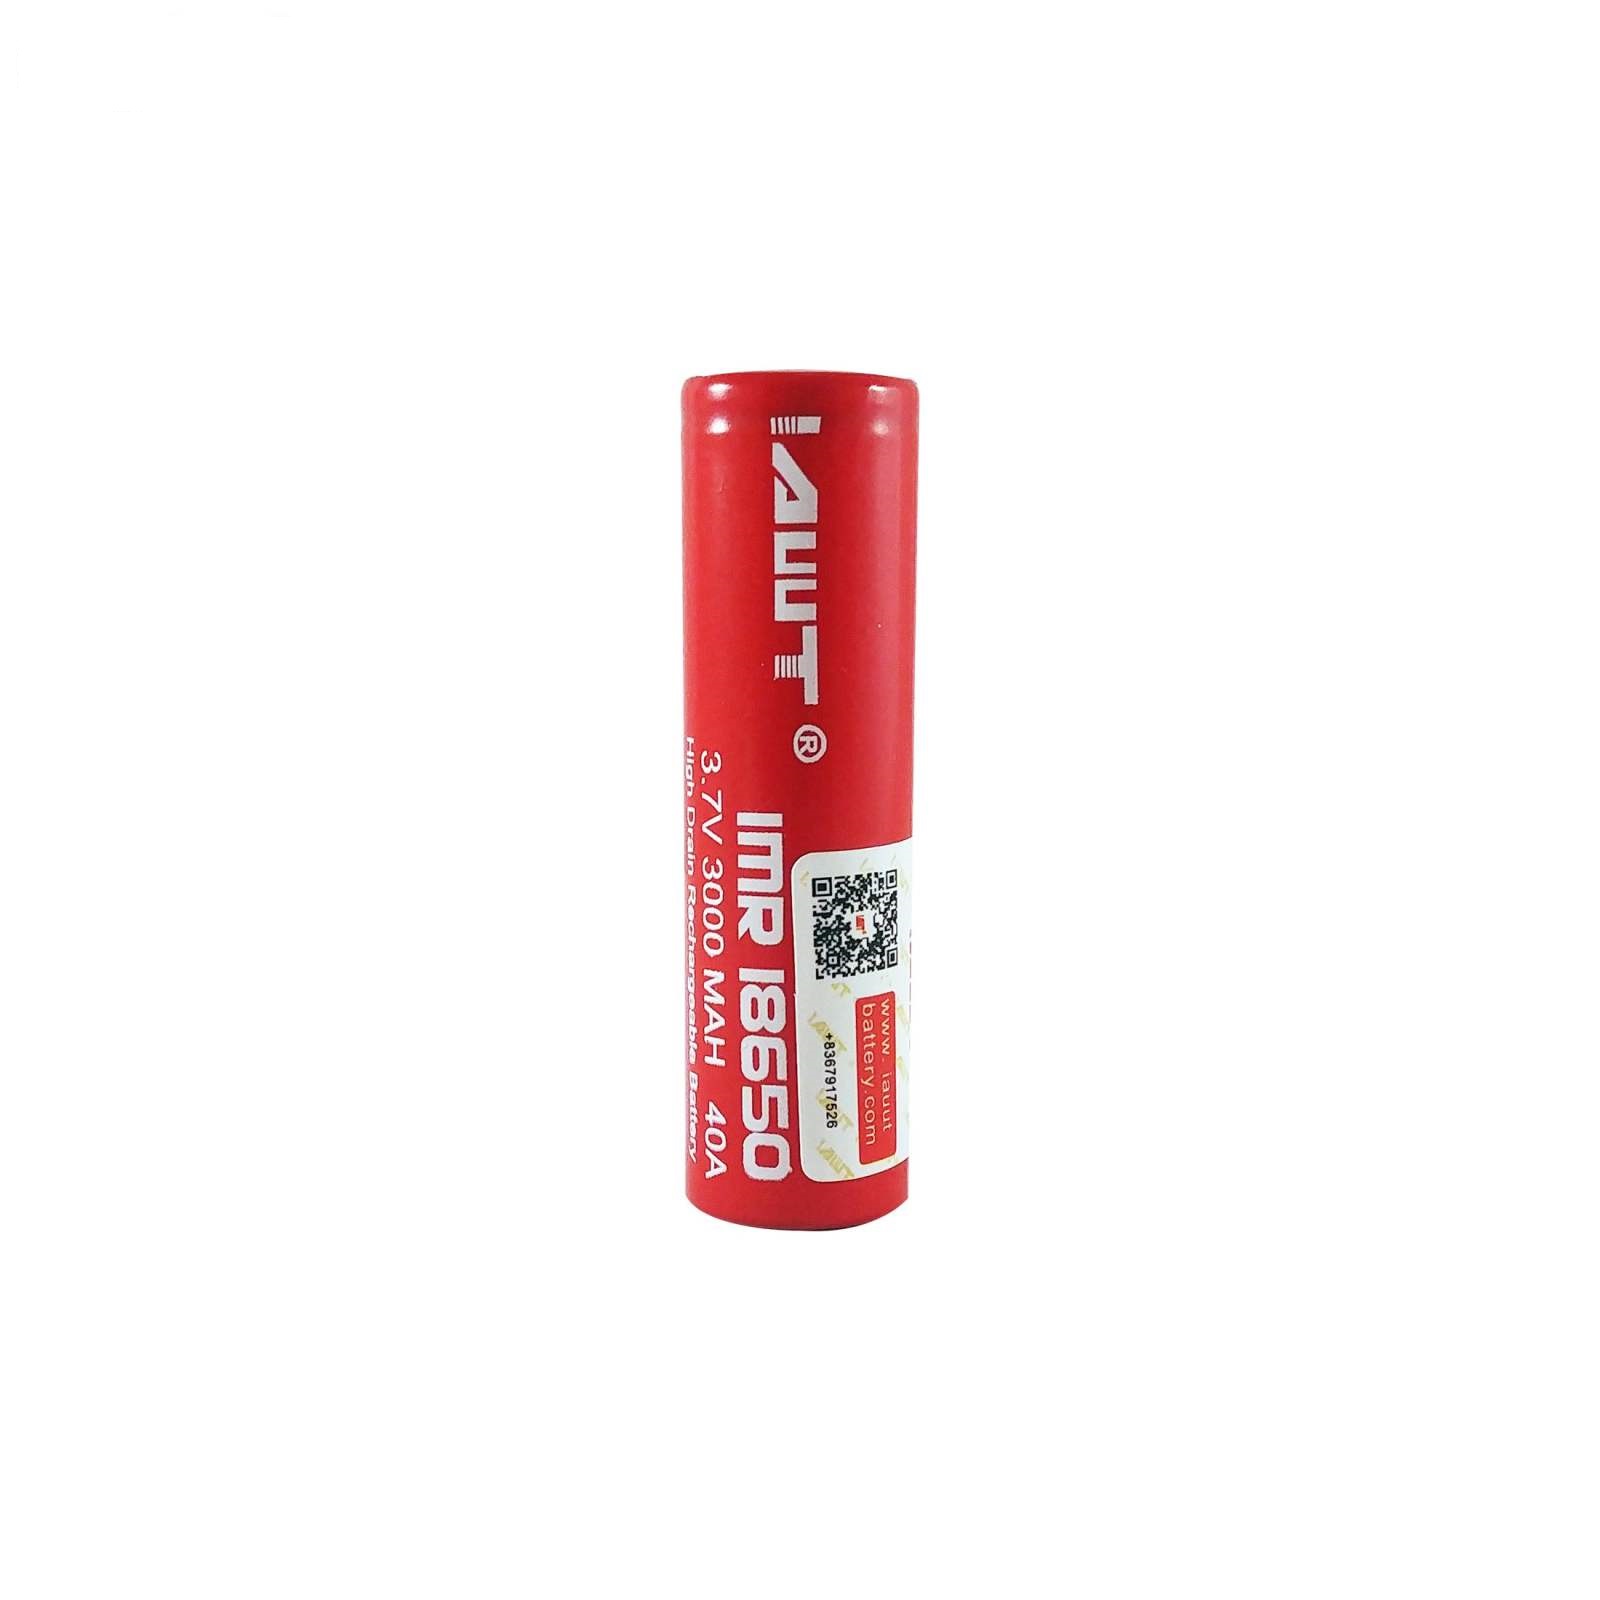 باتری لیتیوم یون قابل شارژ ای یو یو تی کد IMR-18650 ظرفیت 3000 میلی آمپر ساعت بسته 2 عددی